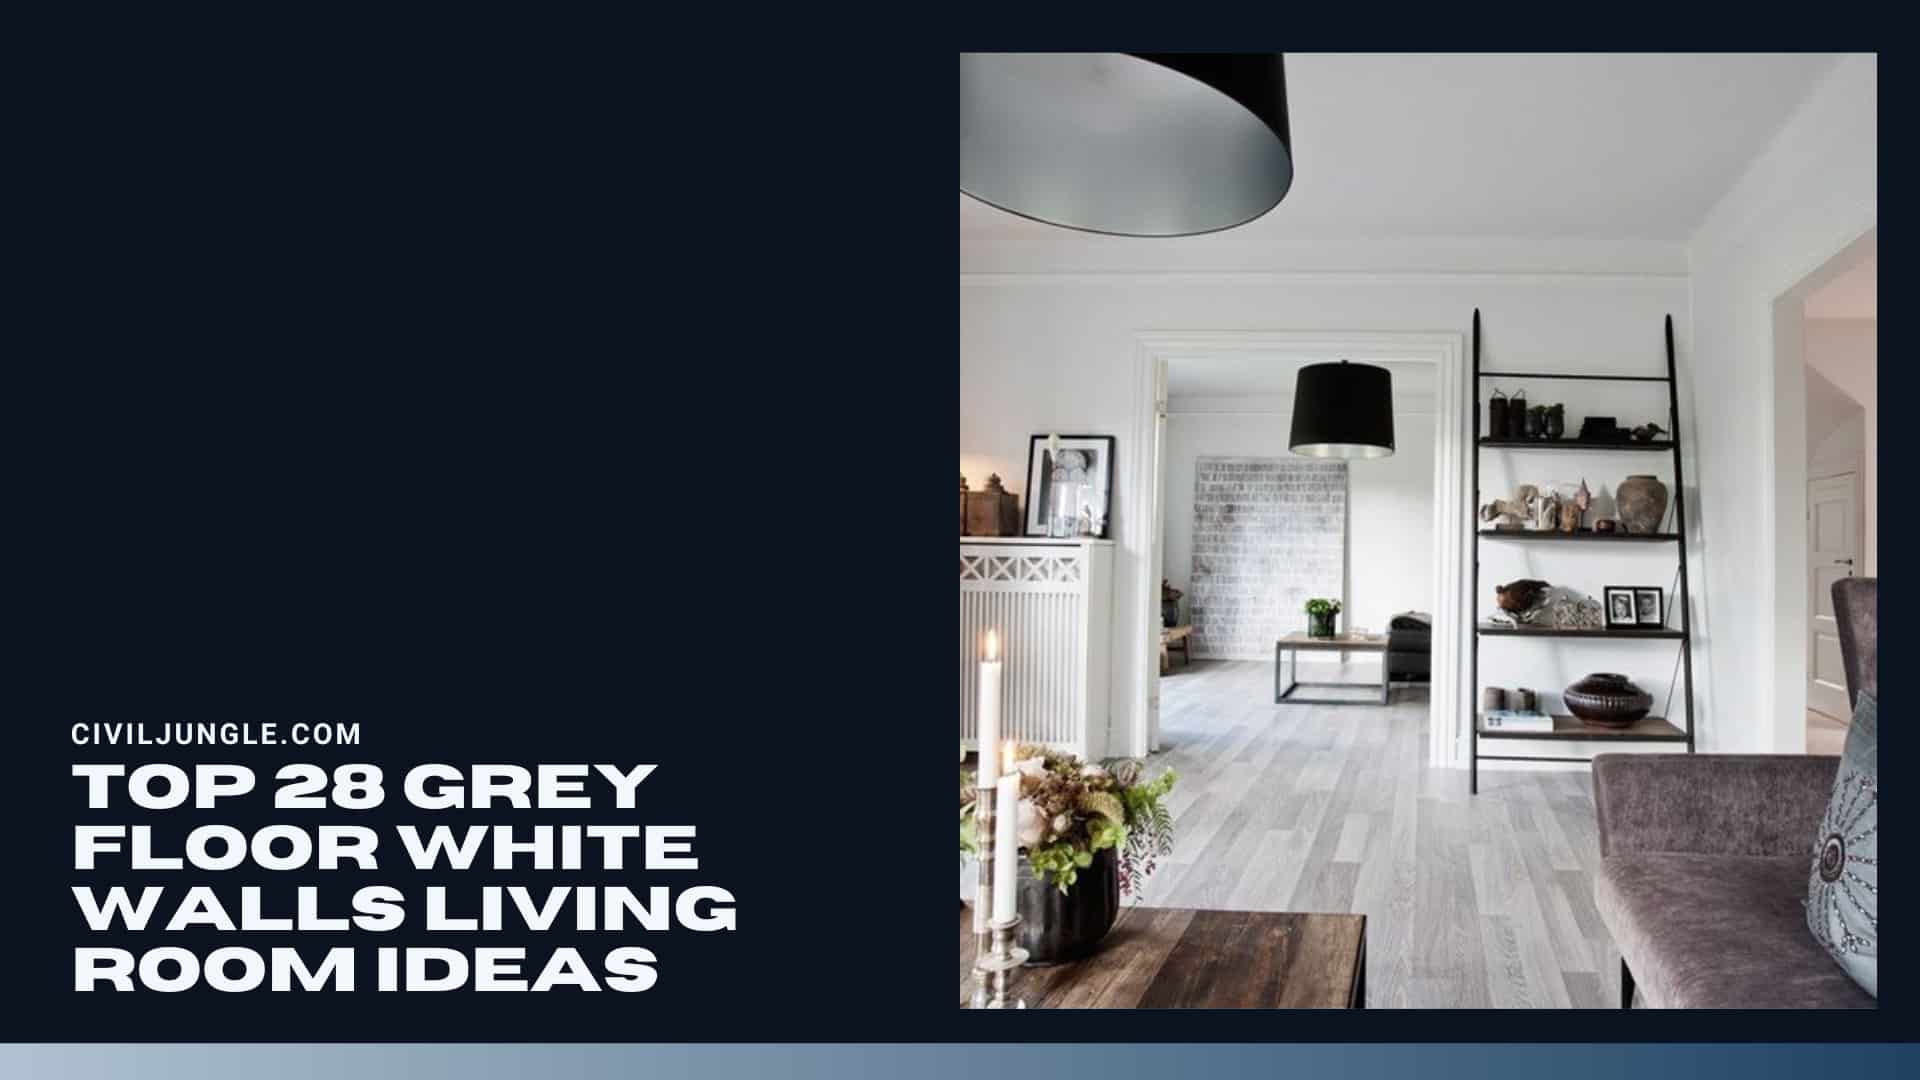 Top 28 Grey Floor White Walls Living Room Ideas